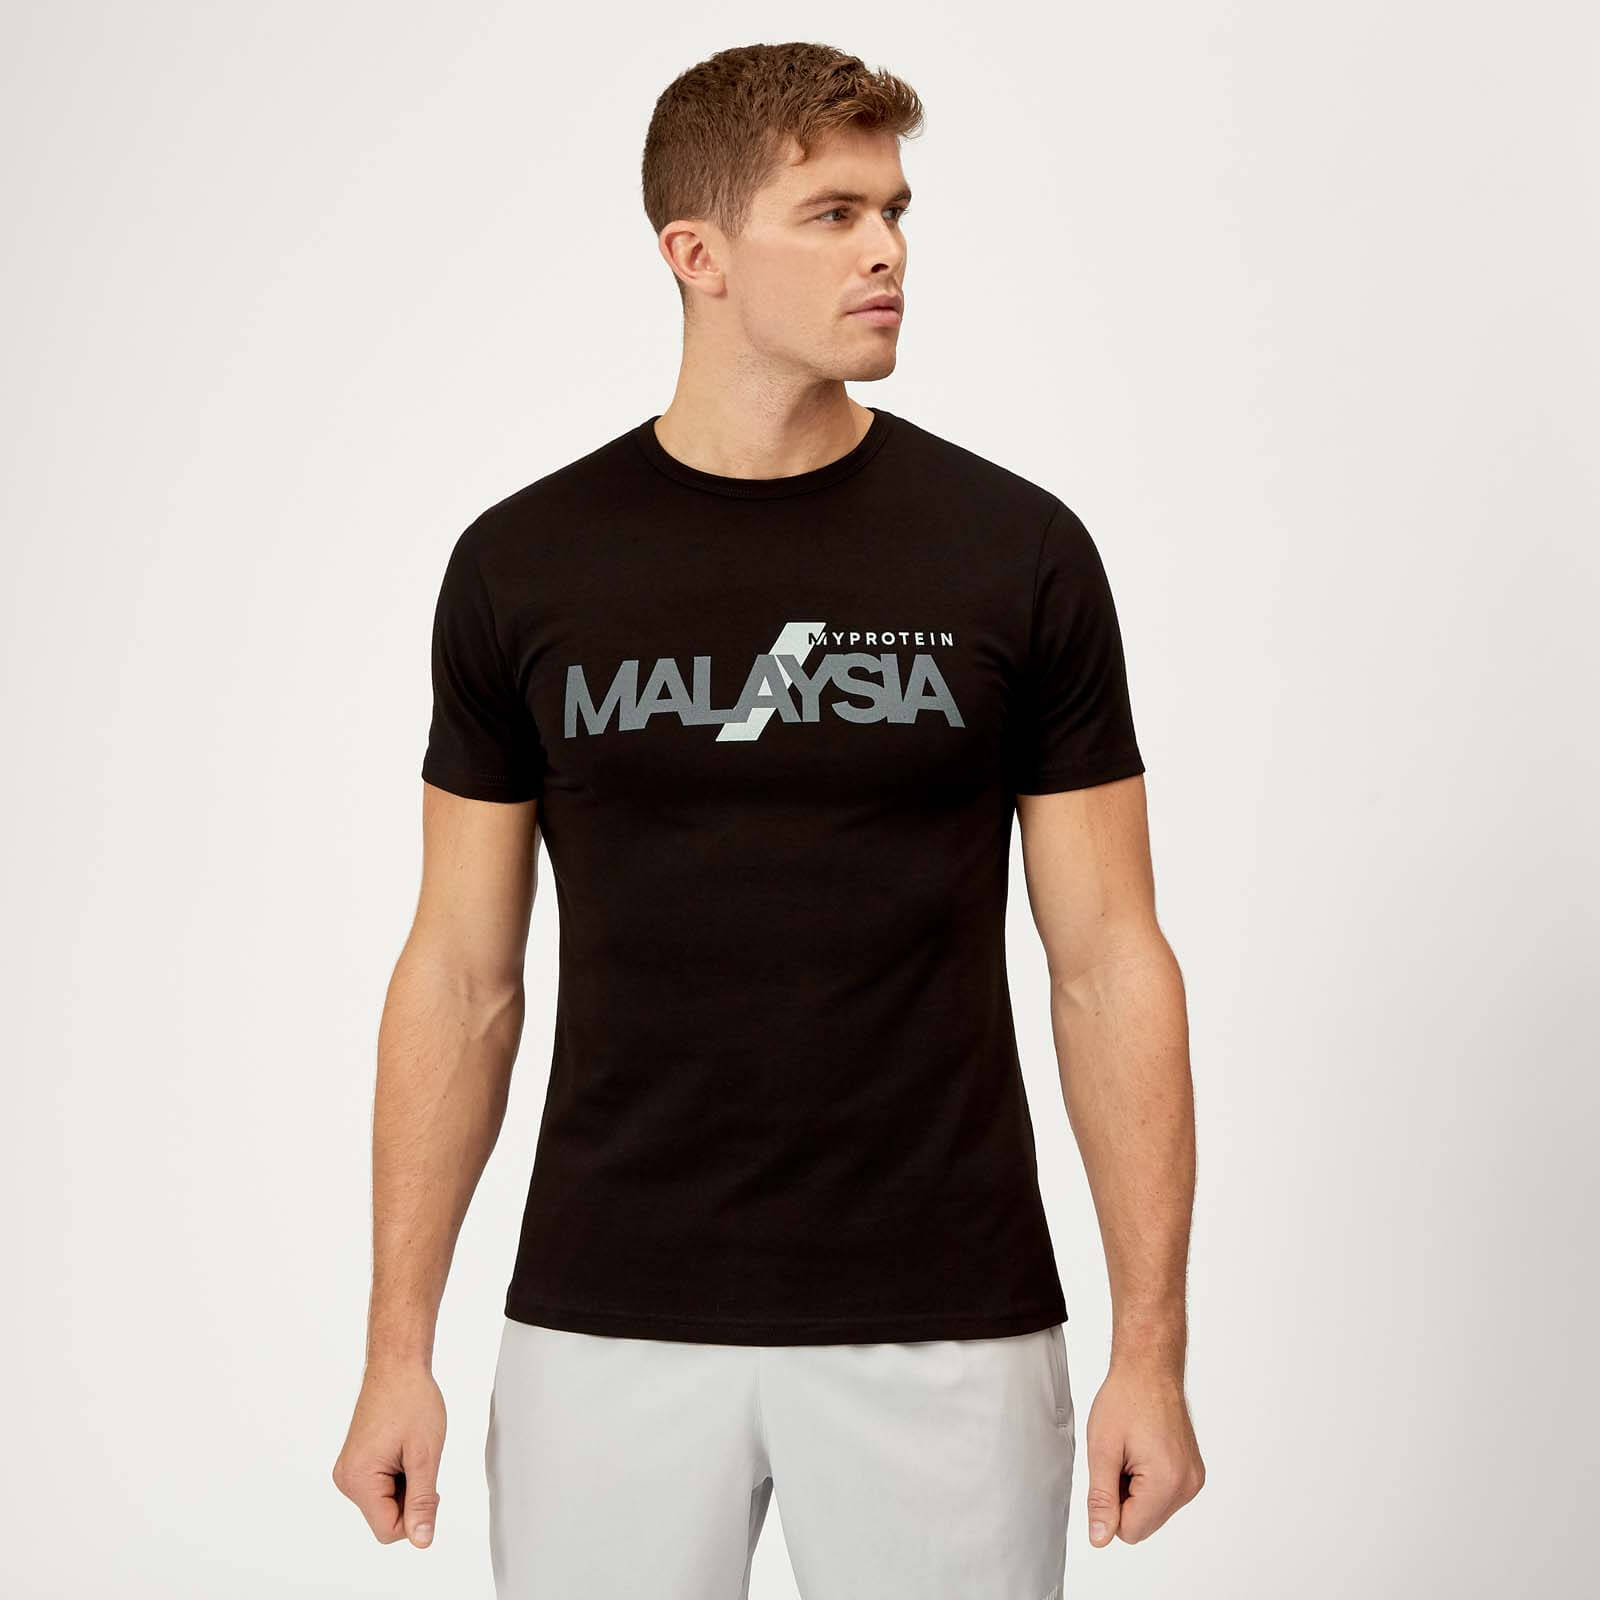 Malaysia Limited Edition T-Shirt